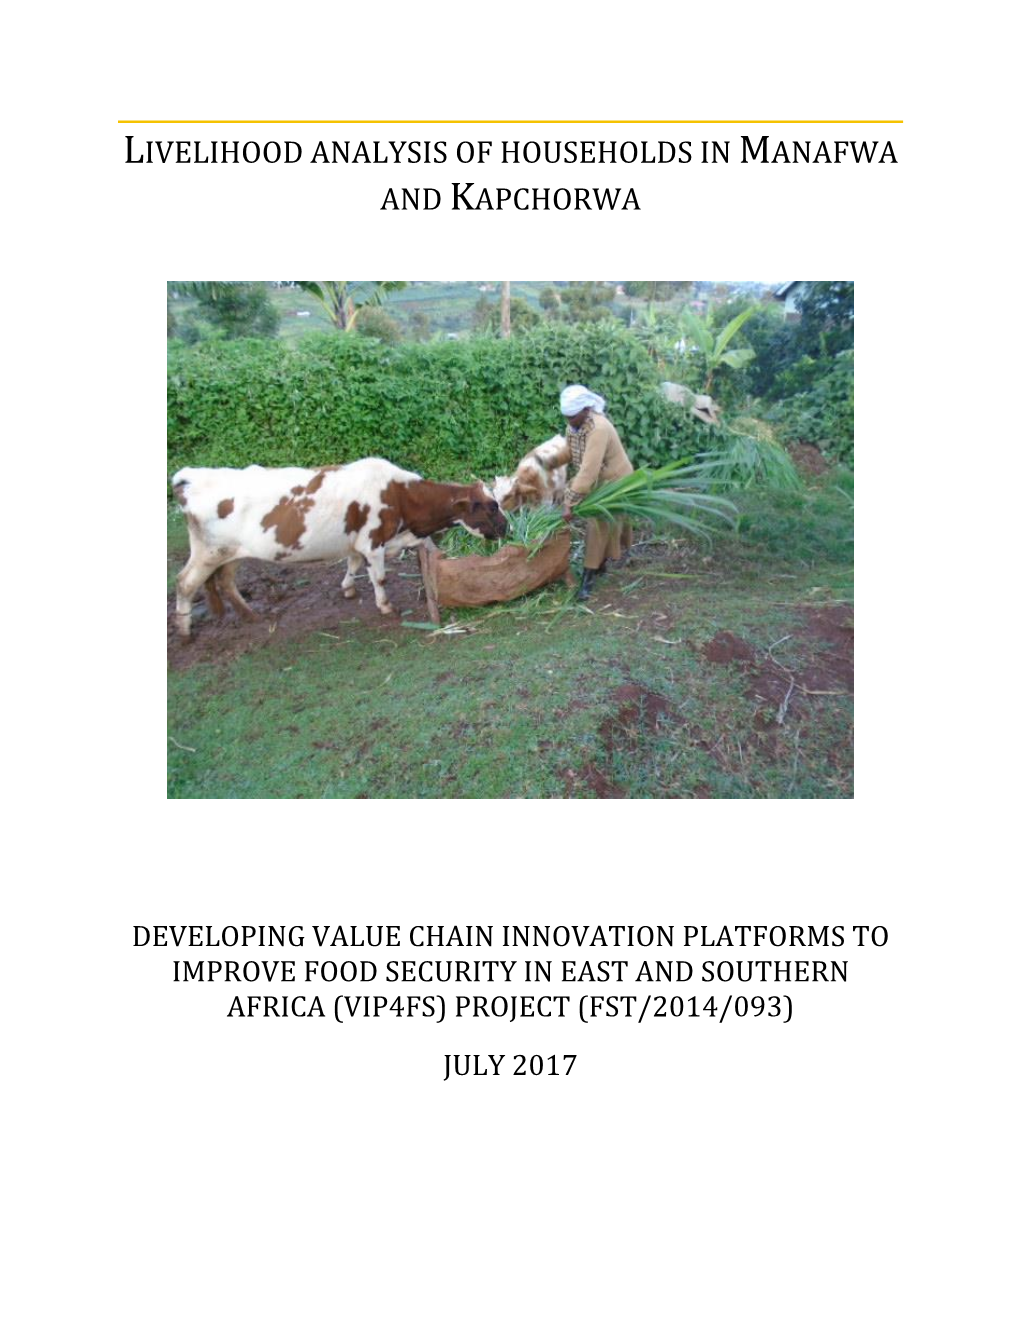 Livelihood Analysis of Households in Manafwa and Kapchorwa